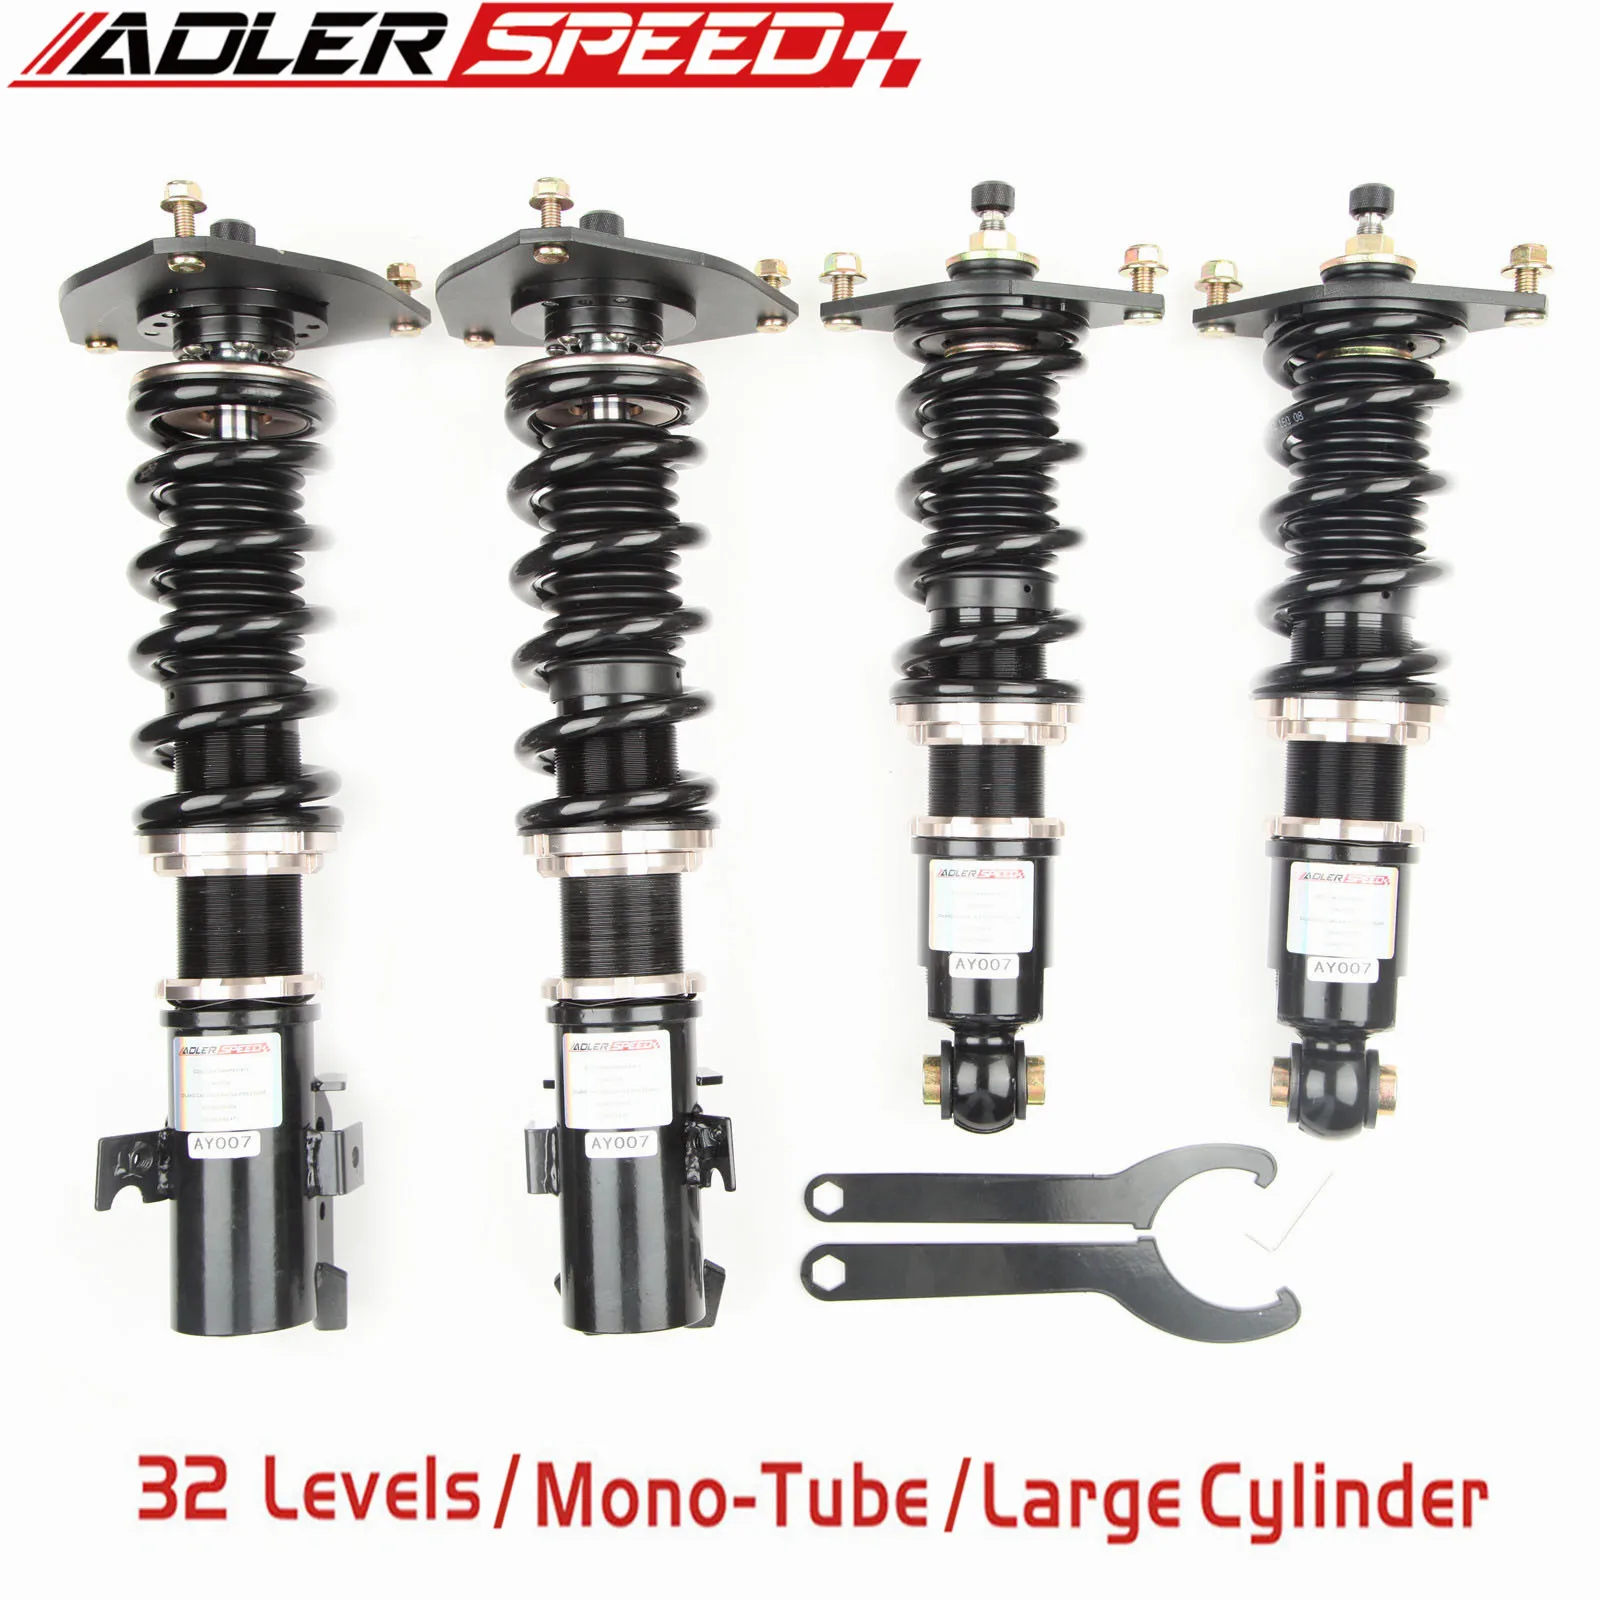 

ADLERSPEED 32 Levels Mono Tube Adjust Coilovers Suspension Kit For Subaru WRX 08-14 / Subaru Impreza 08-16